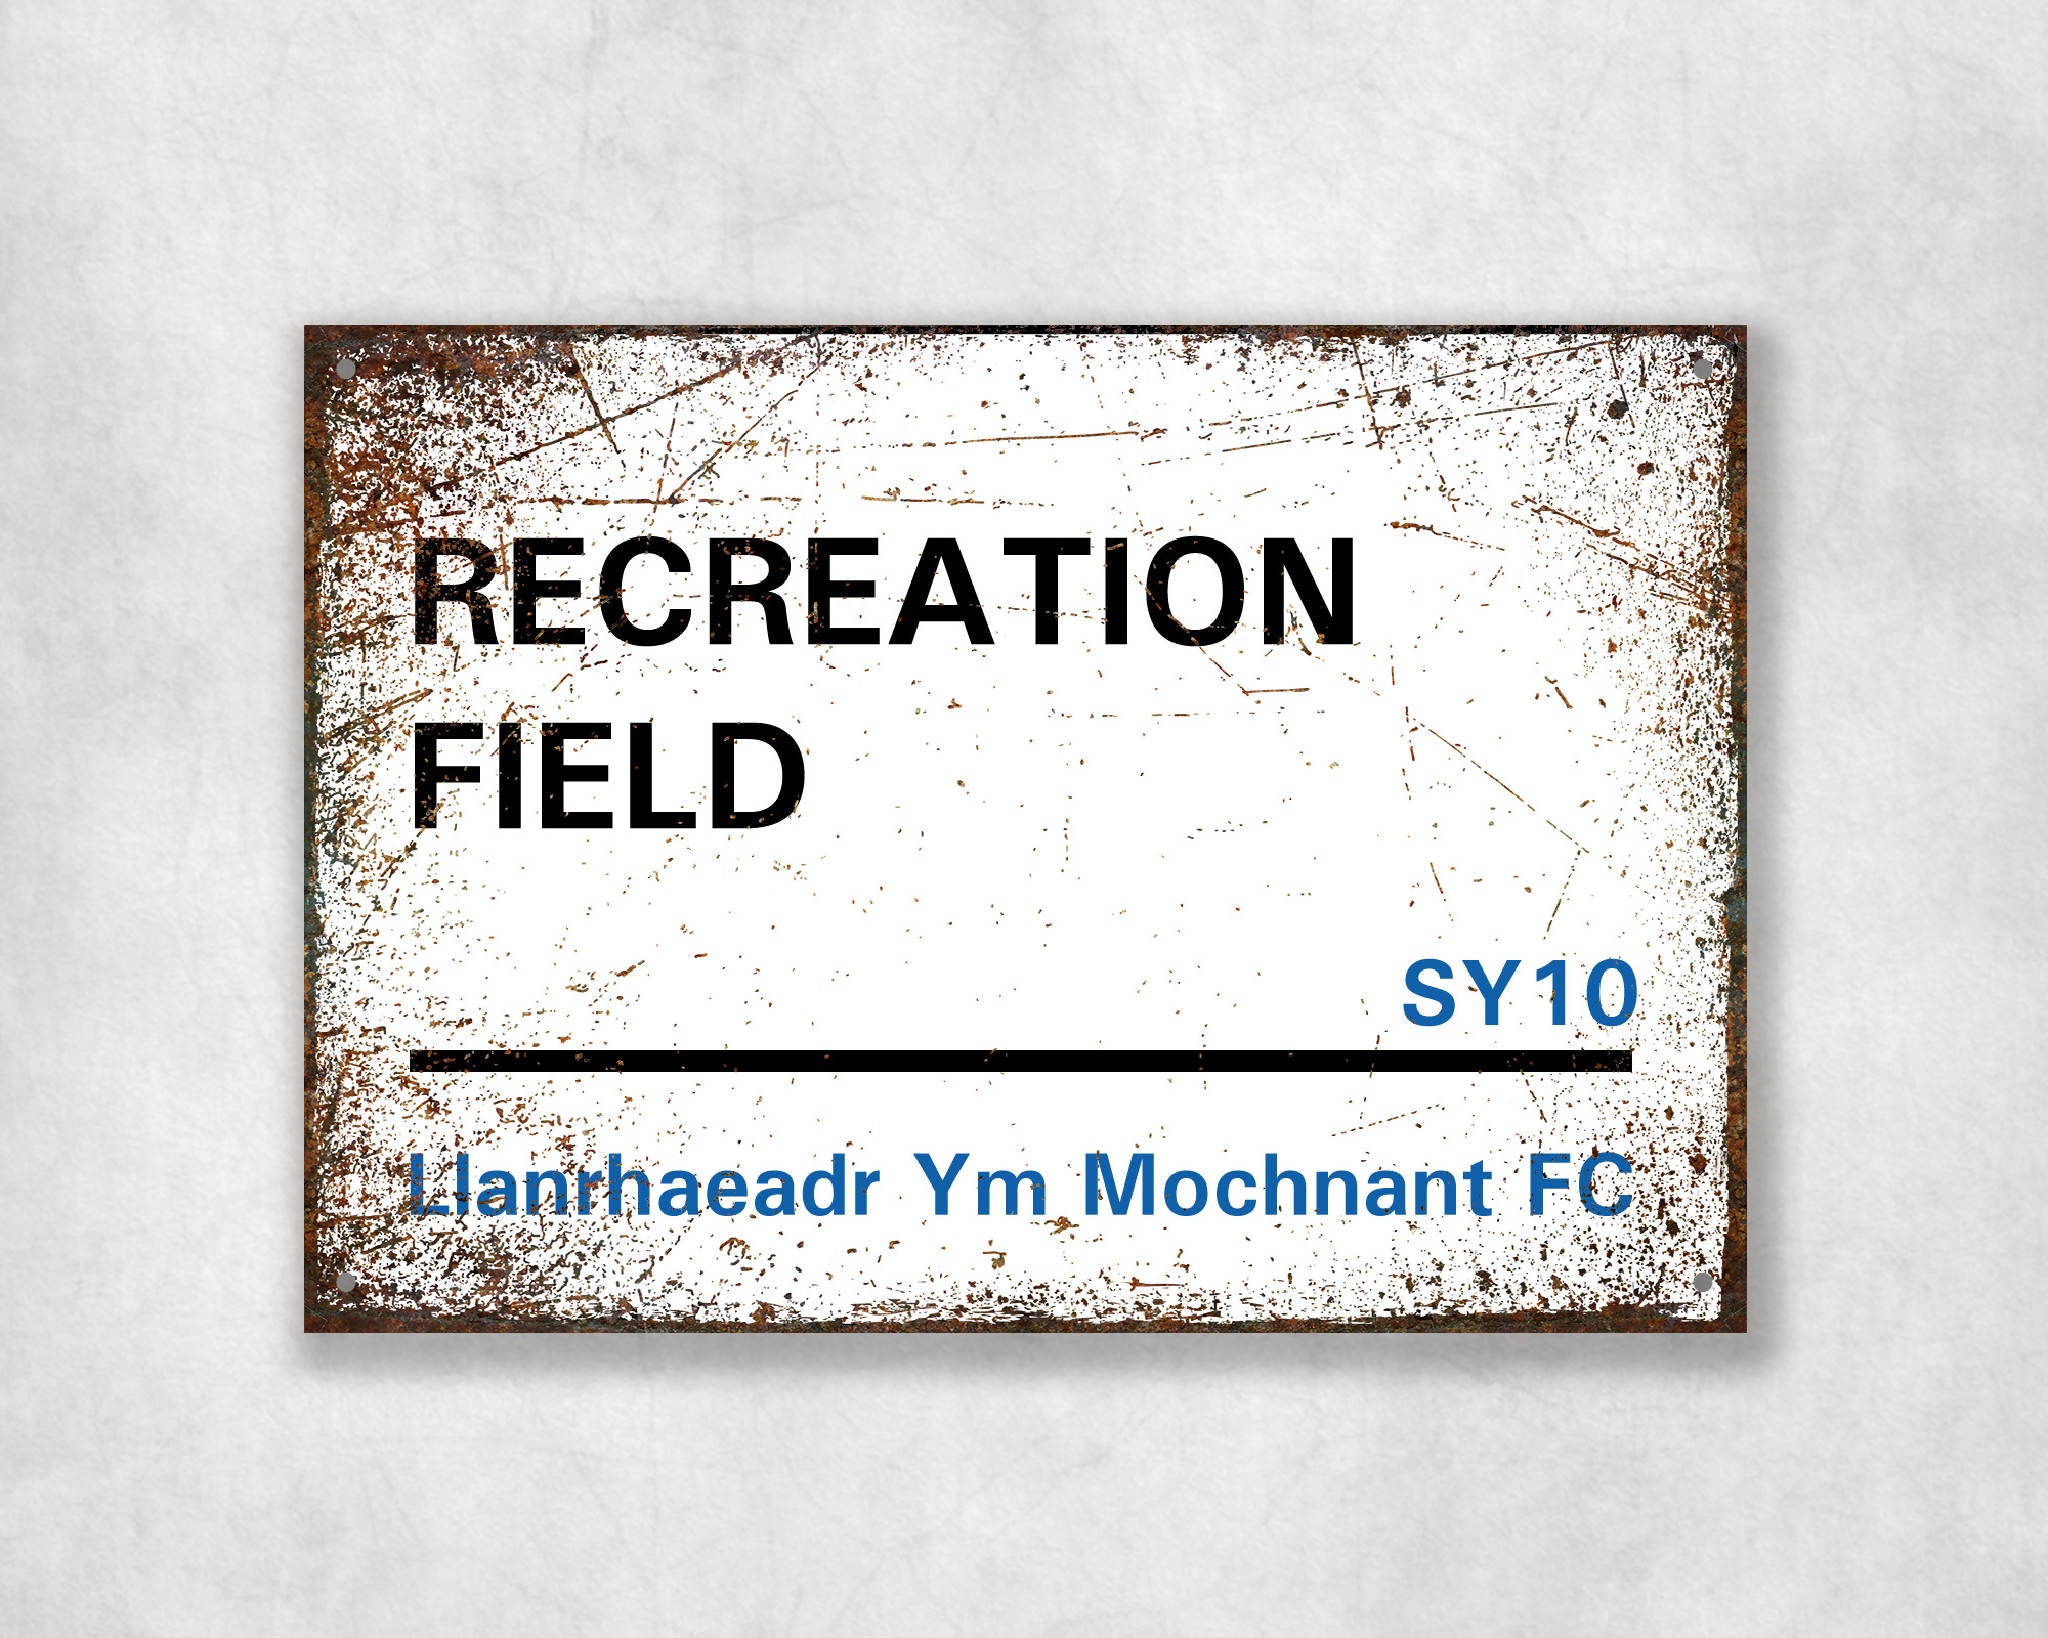 Recreation Field - Llanrhaeadr FC aluminium printed metal street sign - gift, keepsake, football gift